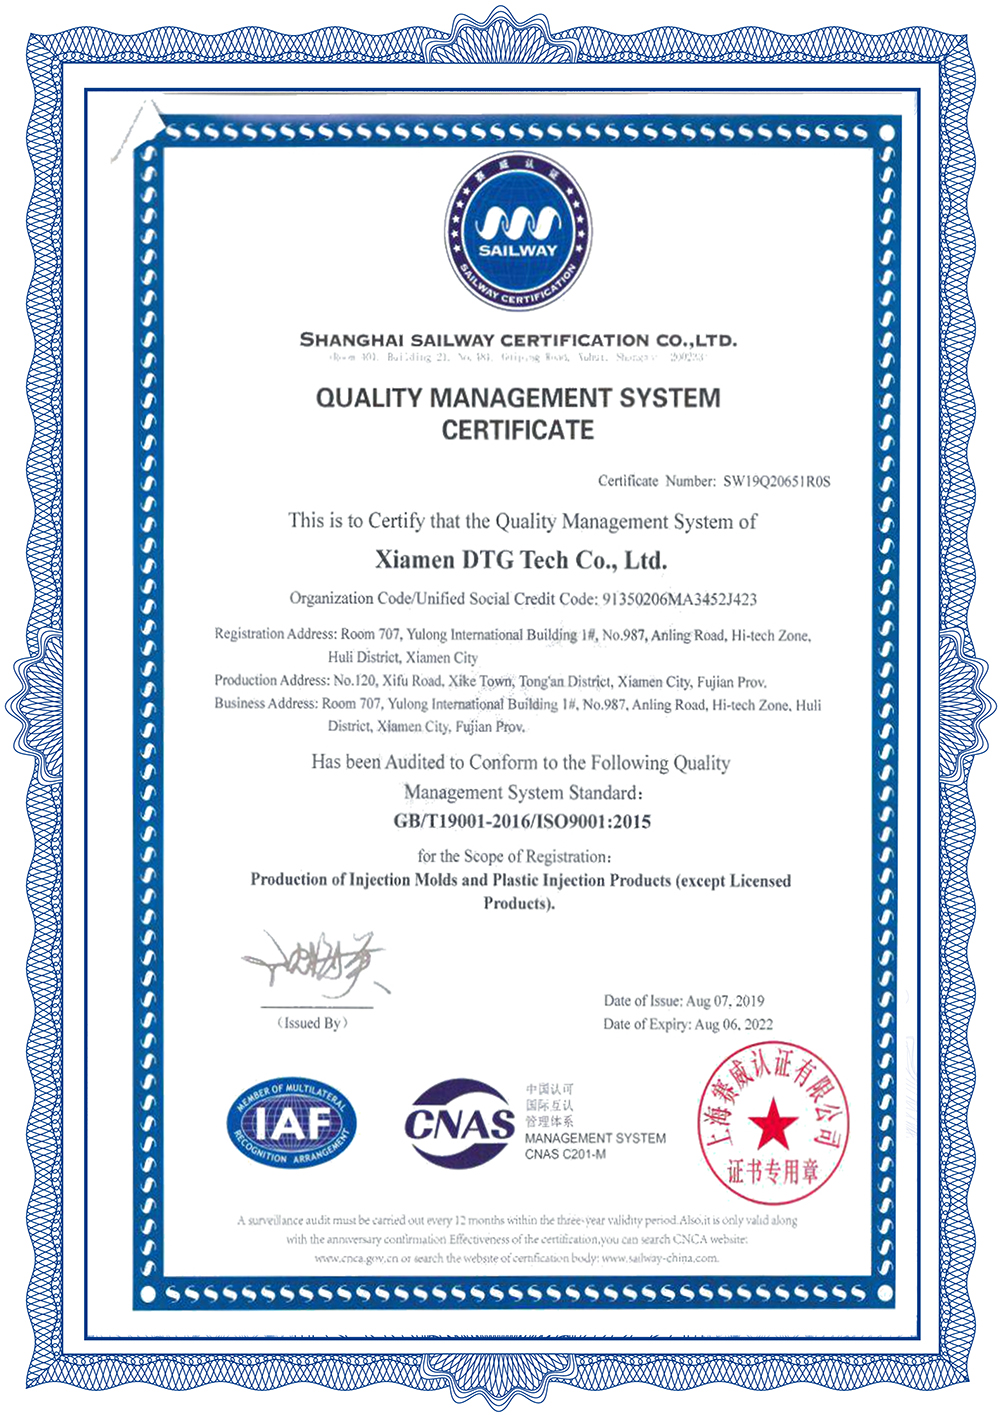 ISO certifikat